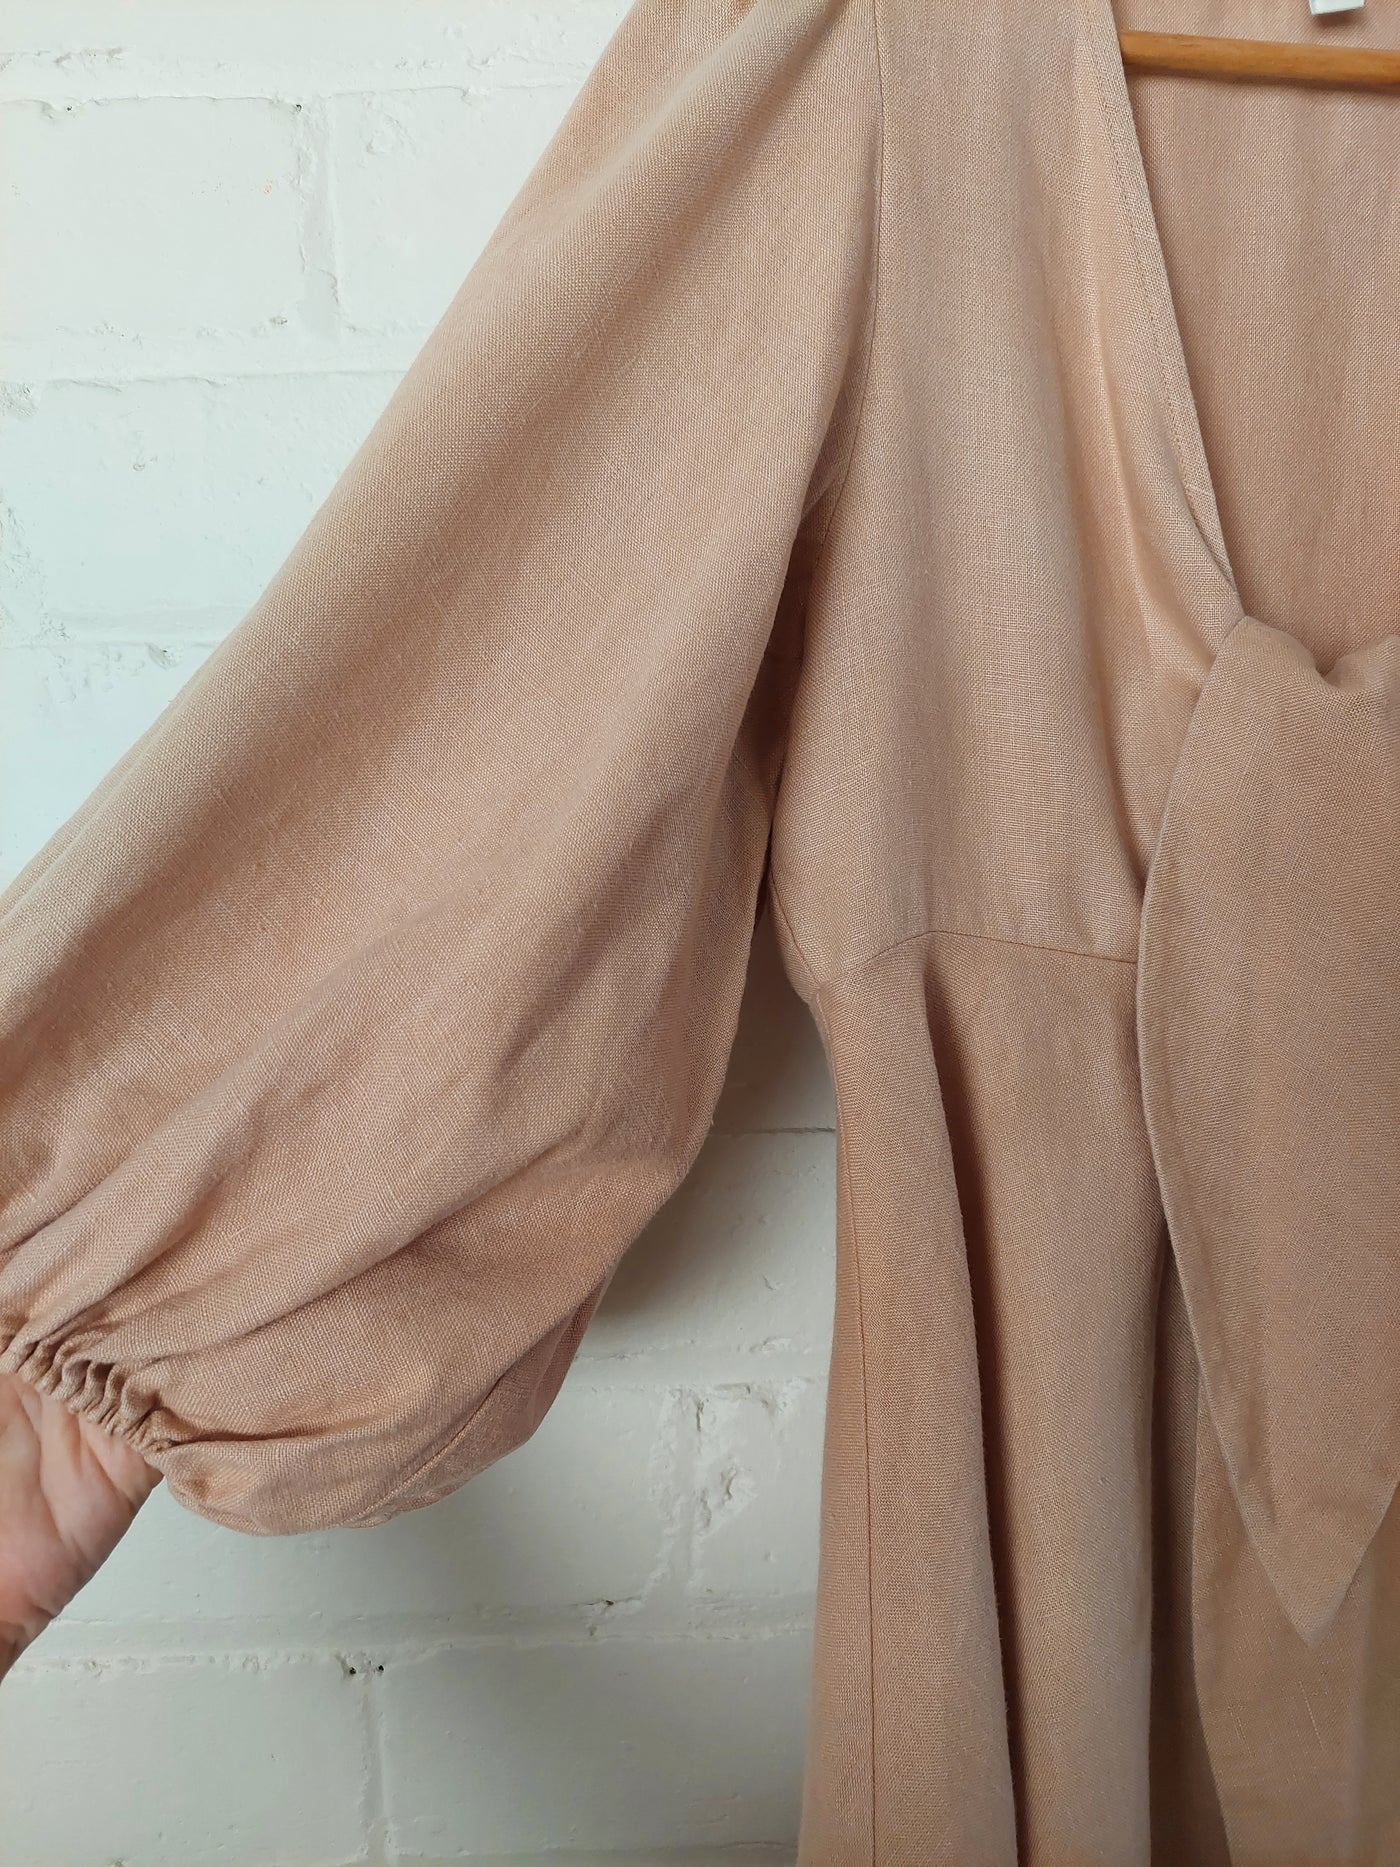 Shona Joy 'Ace' Linen Puff Sleeve Mini Dress in Desert Rose, Size 10